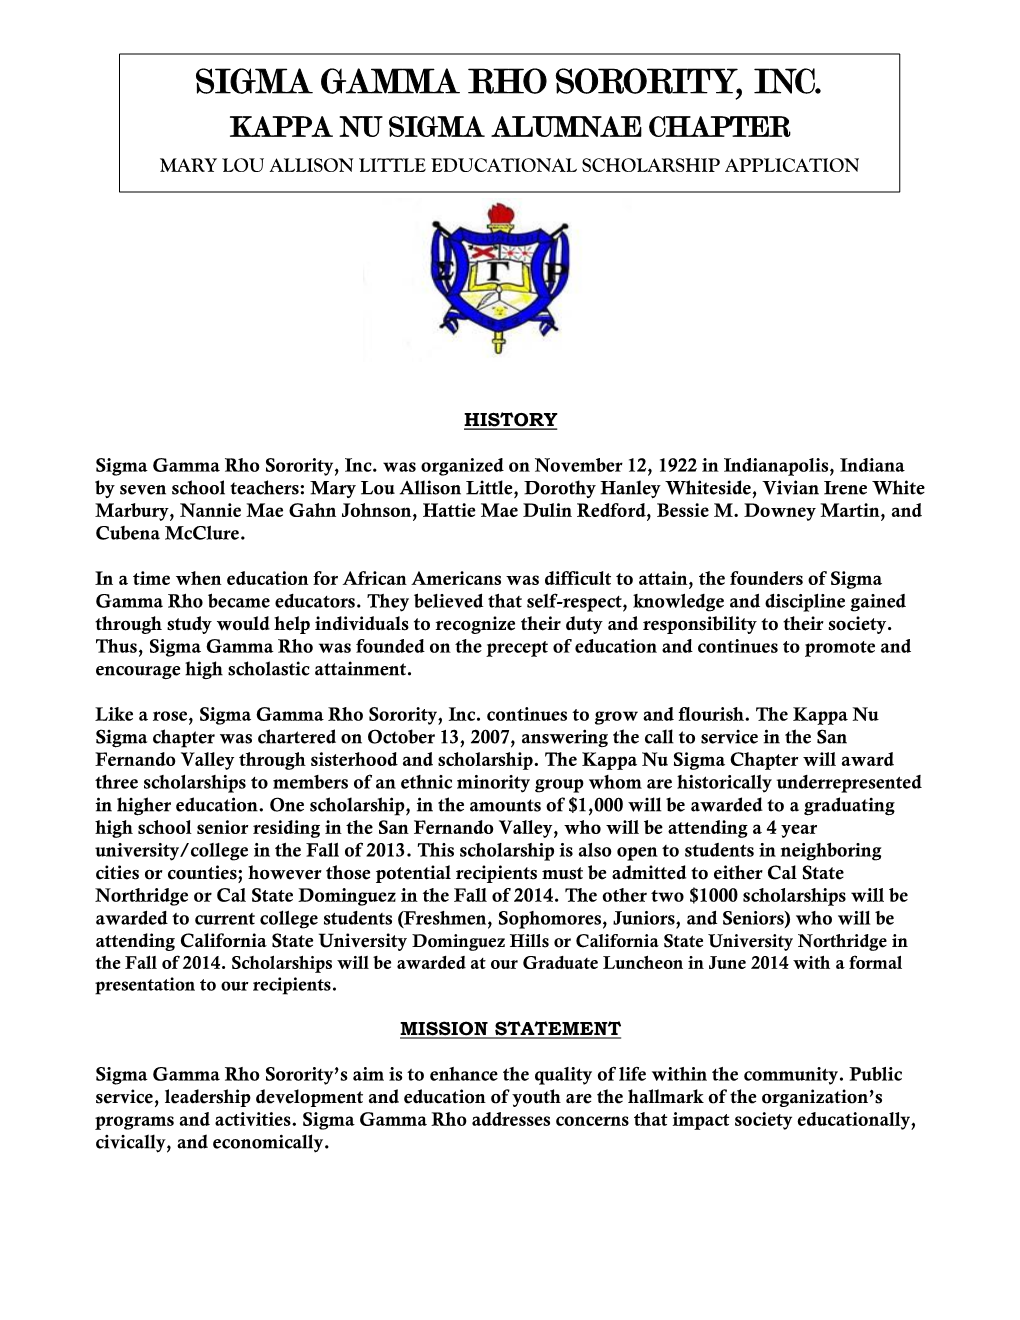 Sigma Gamma Rho Sorority, Inc. Kappa Nu Sigma Alumnae Chapter Mary Lou Allison Little Educational Scholarship Application